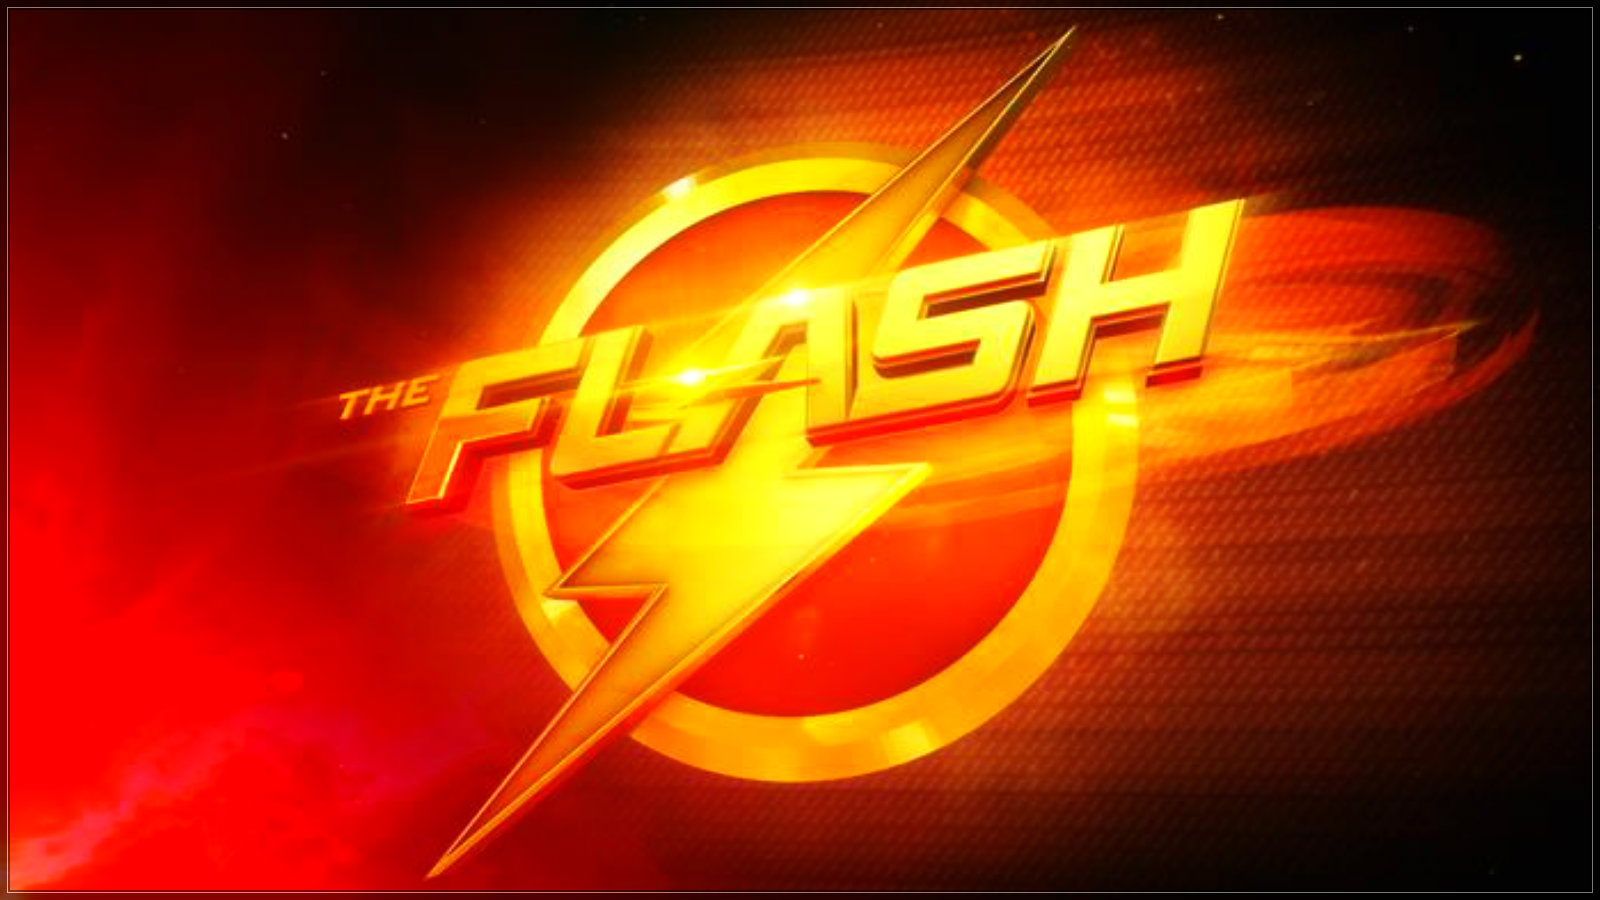 CW The Flash Wallpaper Free Downloads #5308 Wallpaper | High ...